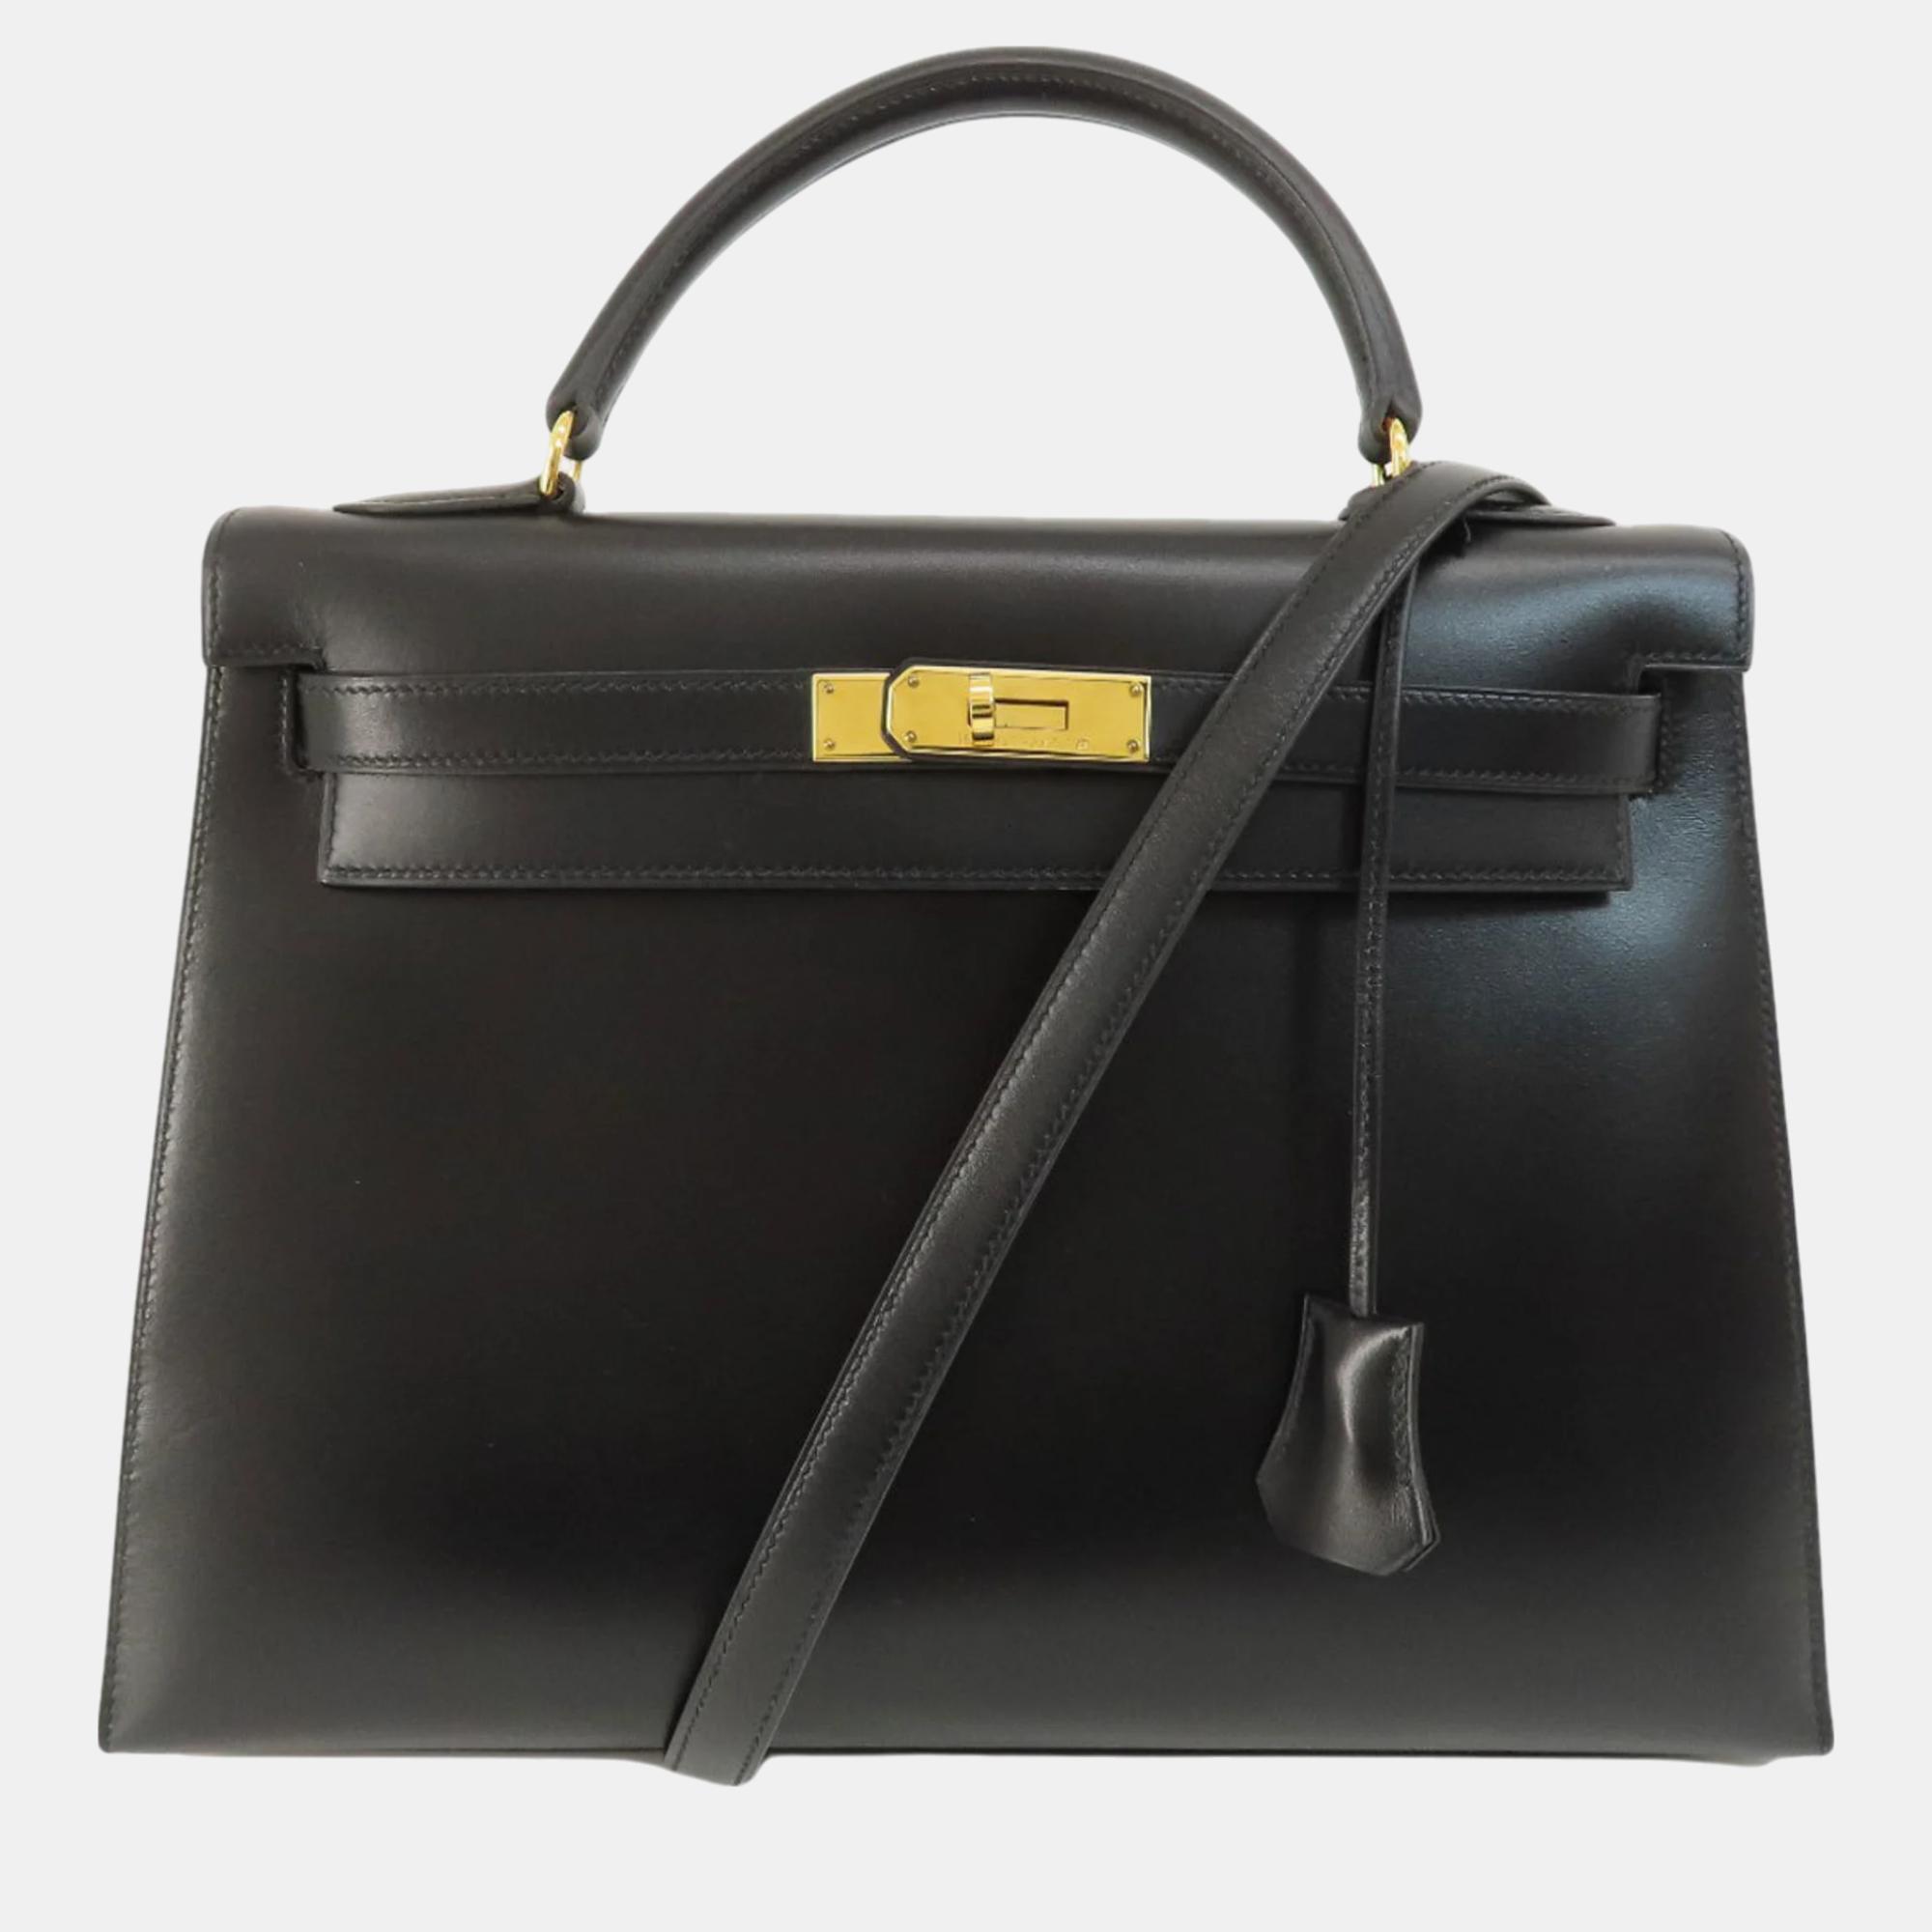 Hermes black box calf leather kelly 32 handbag